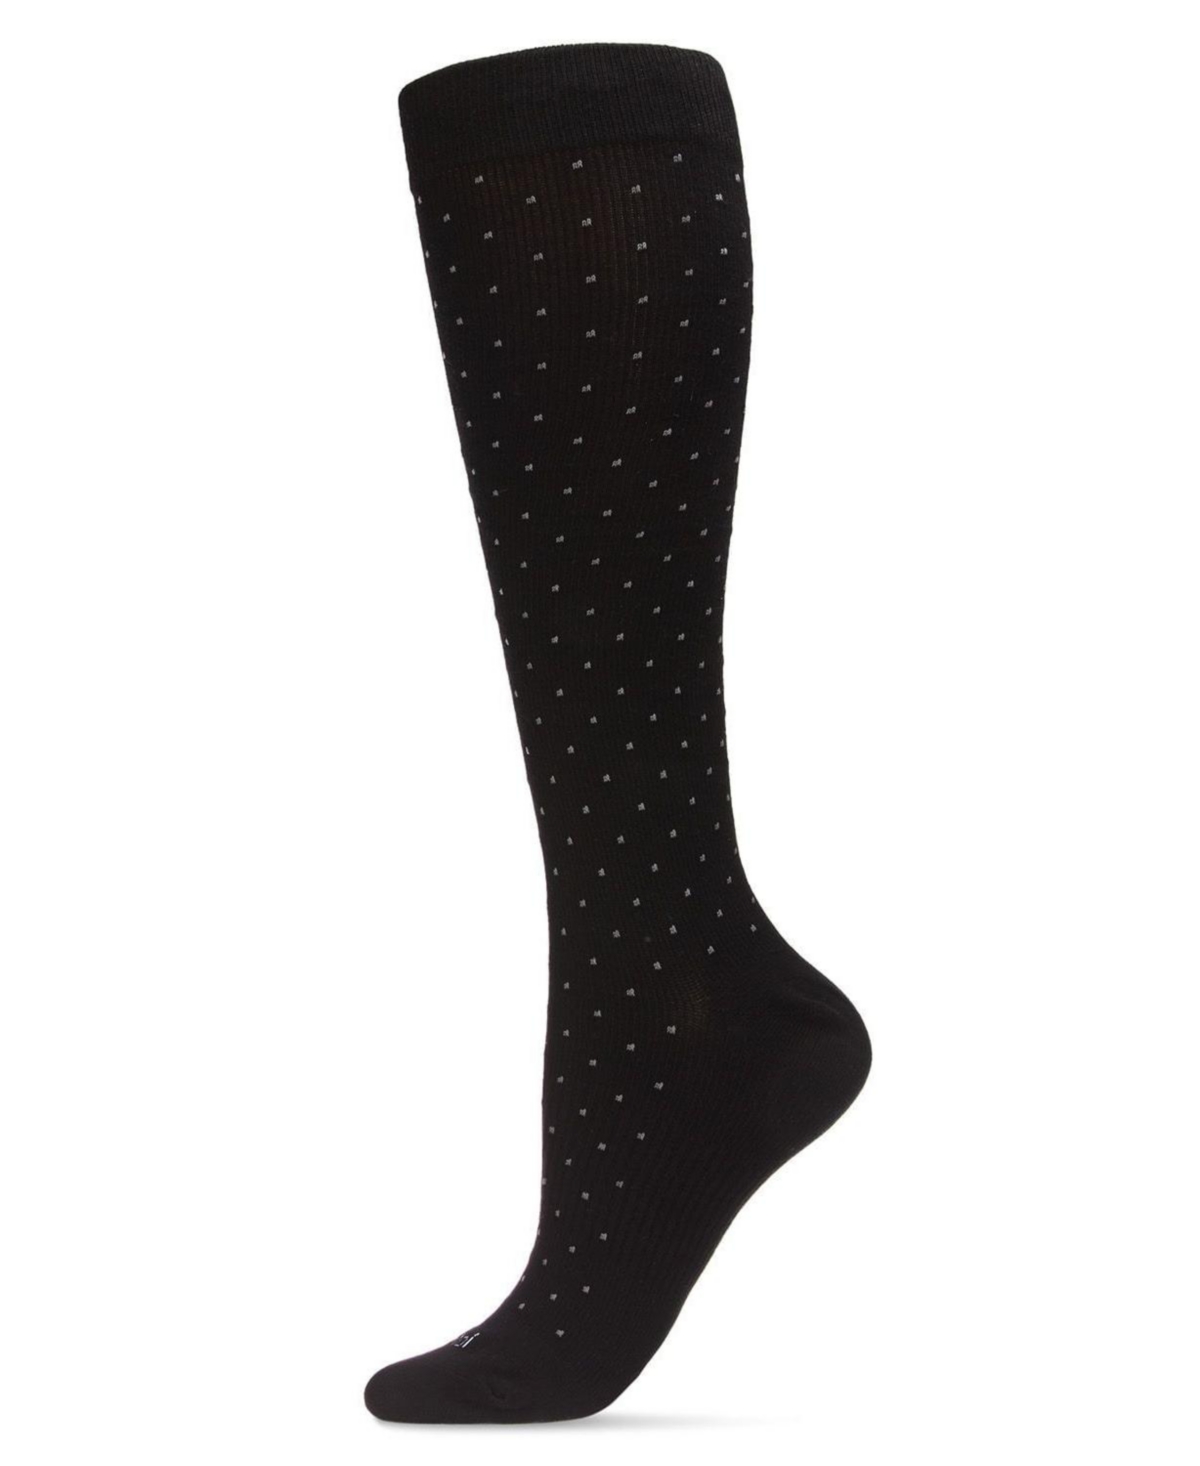 Men's Swiss Dot Cotton Compression Socks - Navy